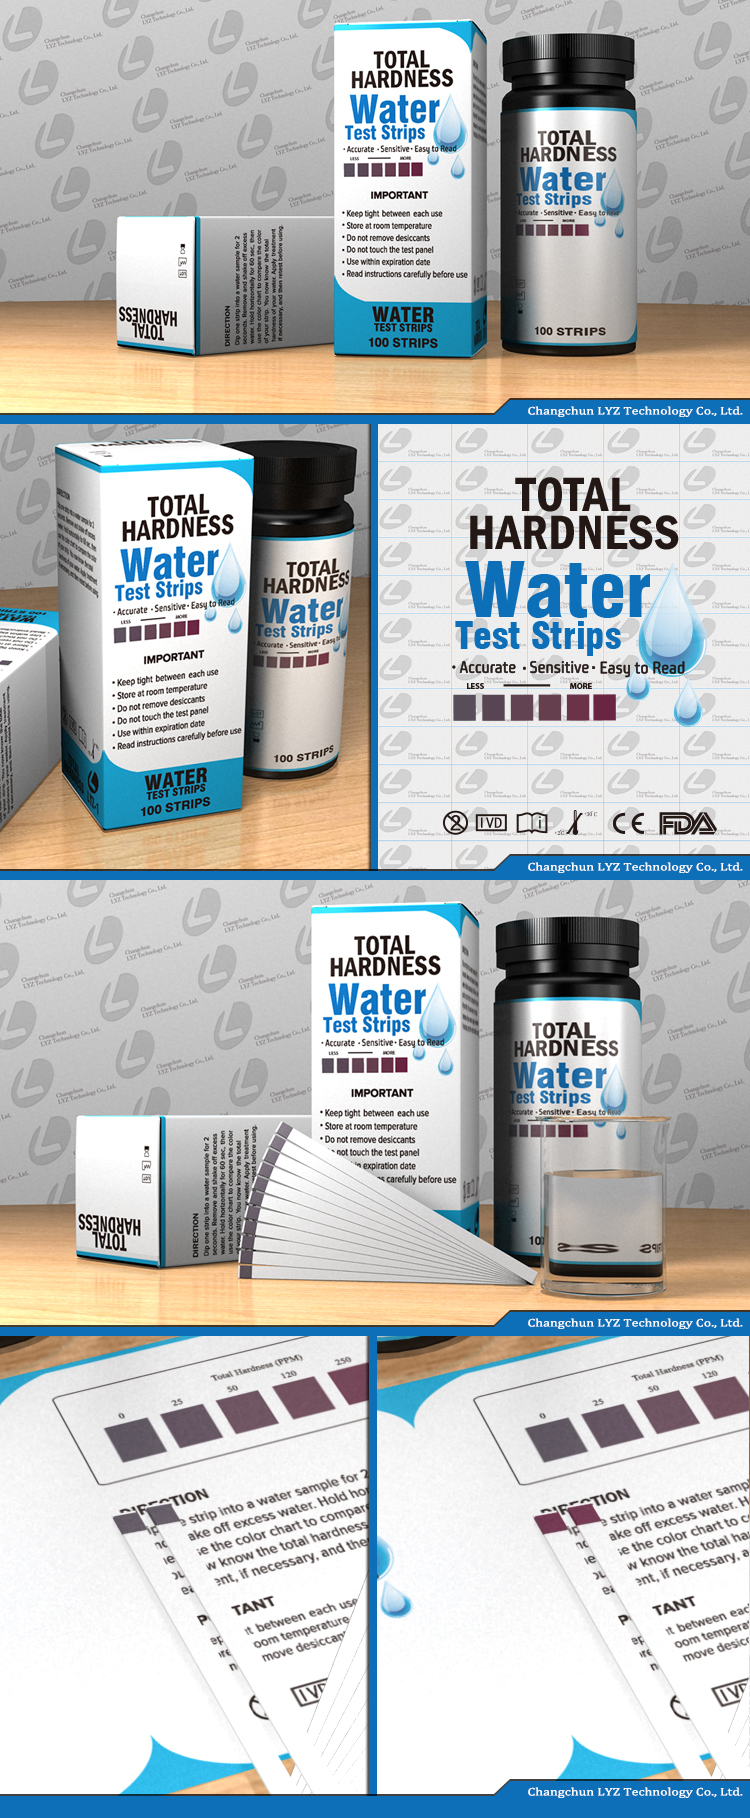 water hardness test kits